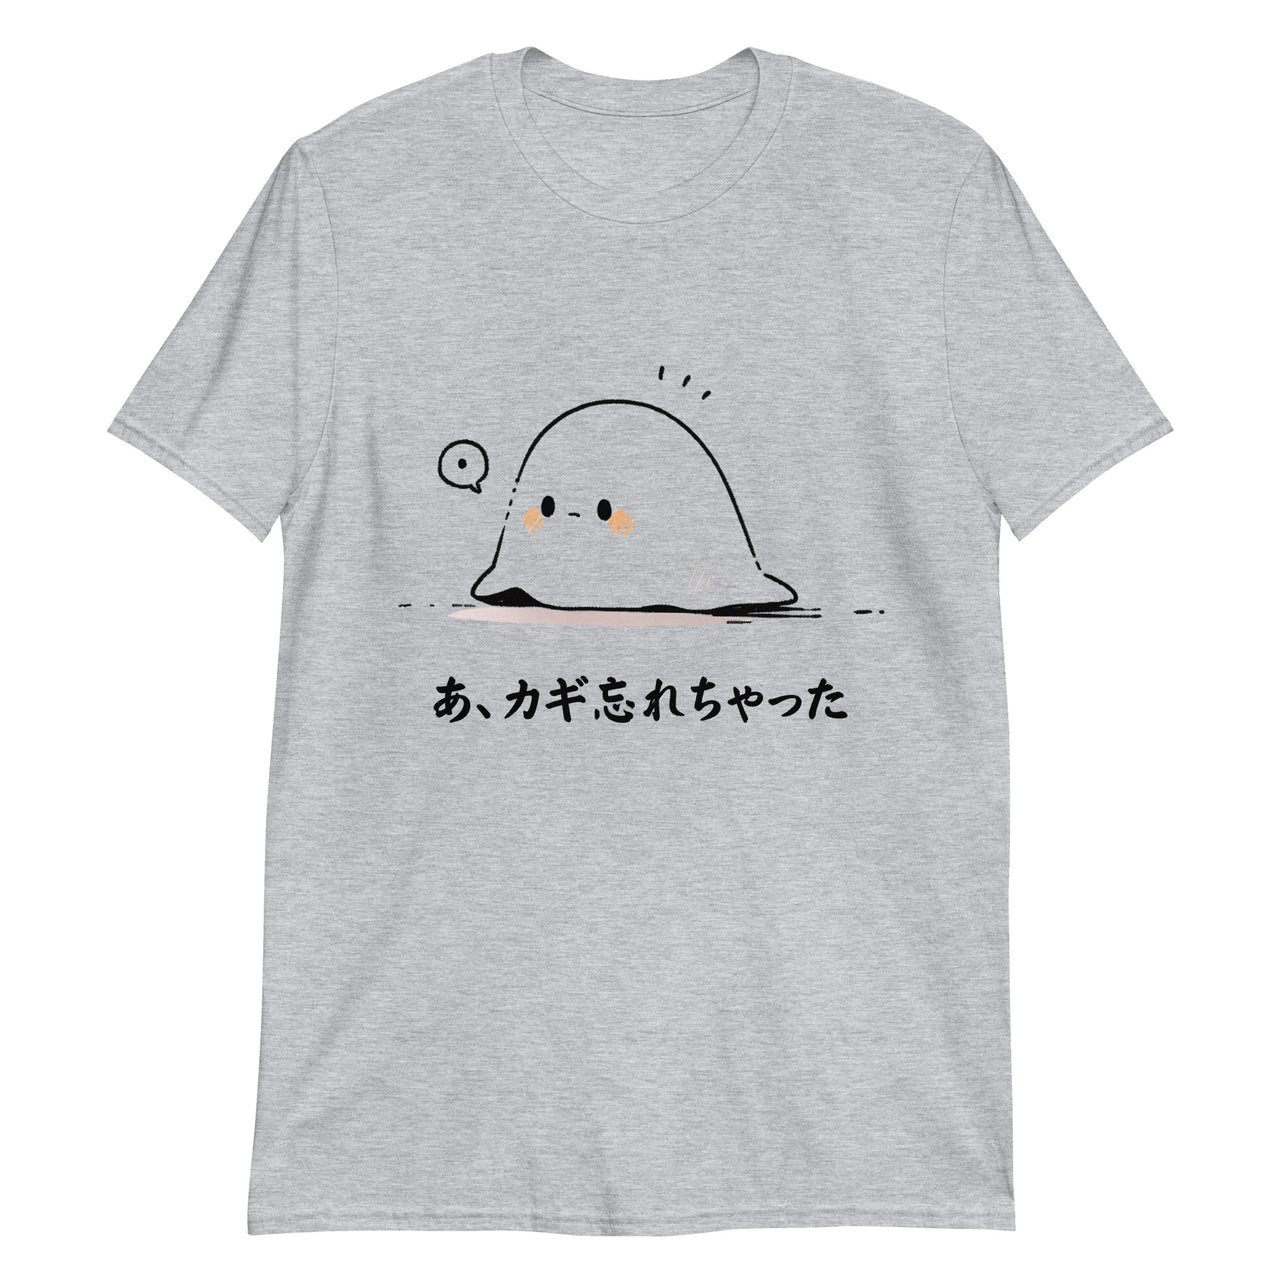 Surprised Manga Ghost - Key Forgetfulness T-Shirt